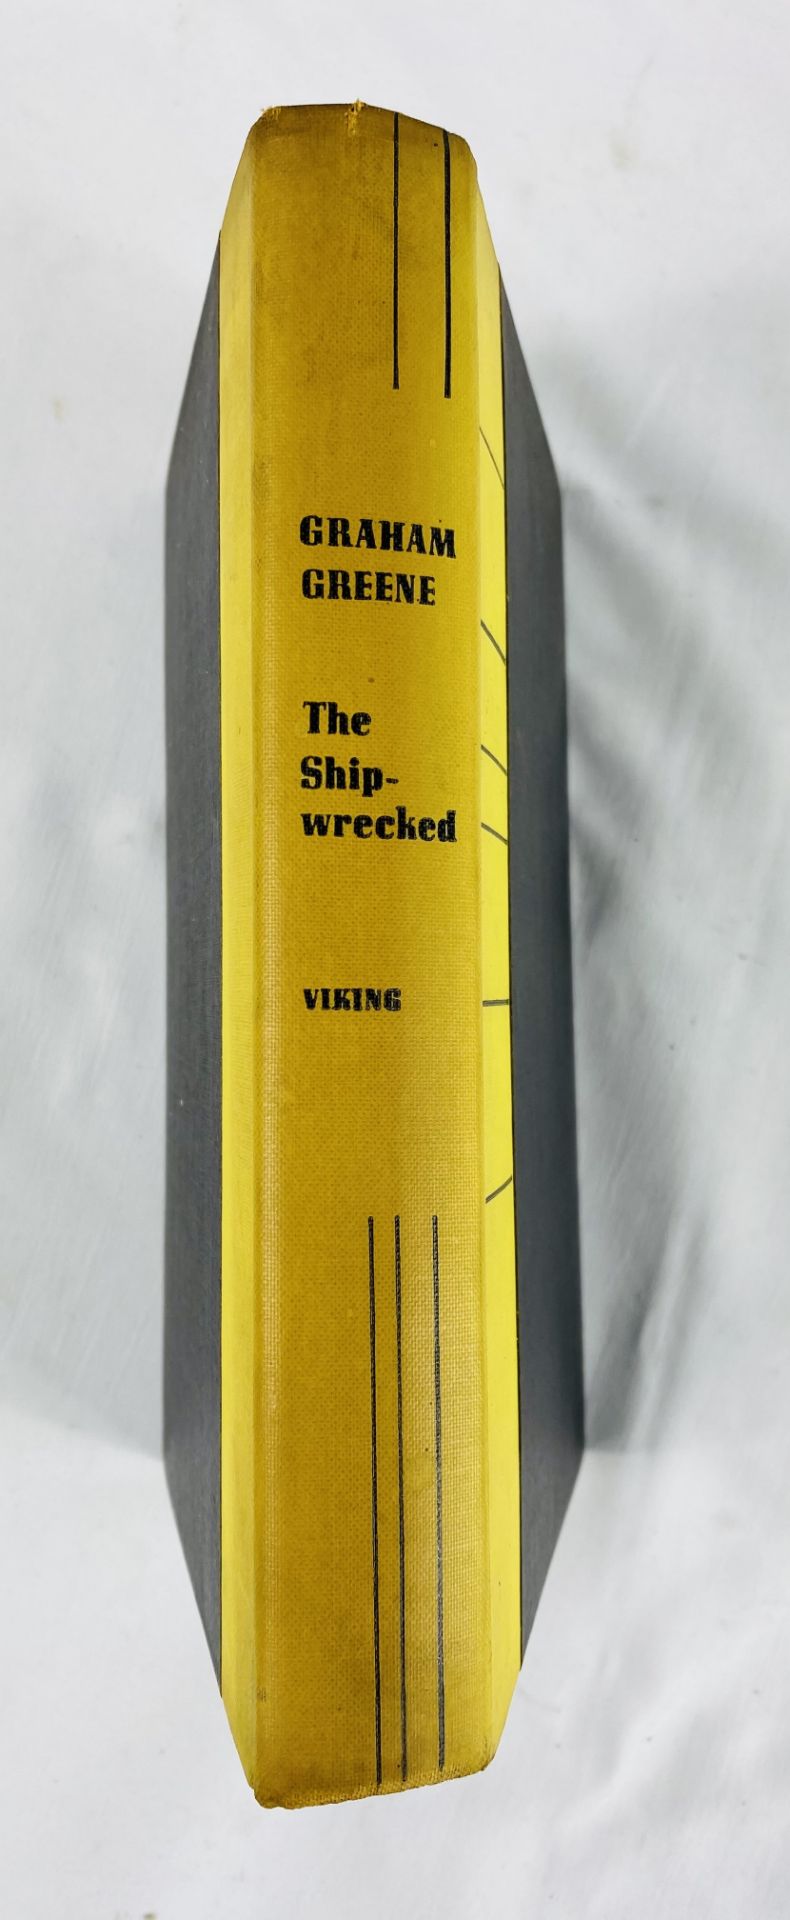 Graham Greene, The Shipwrecked, Viking Press, 1953.